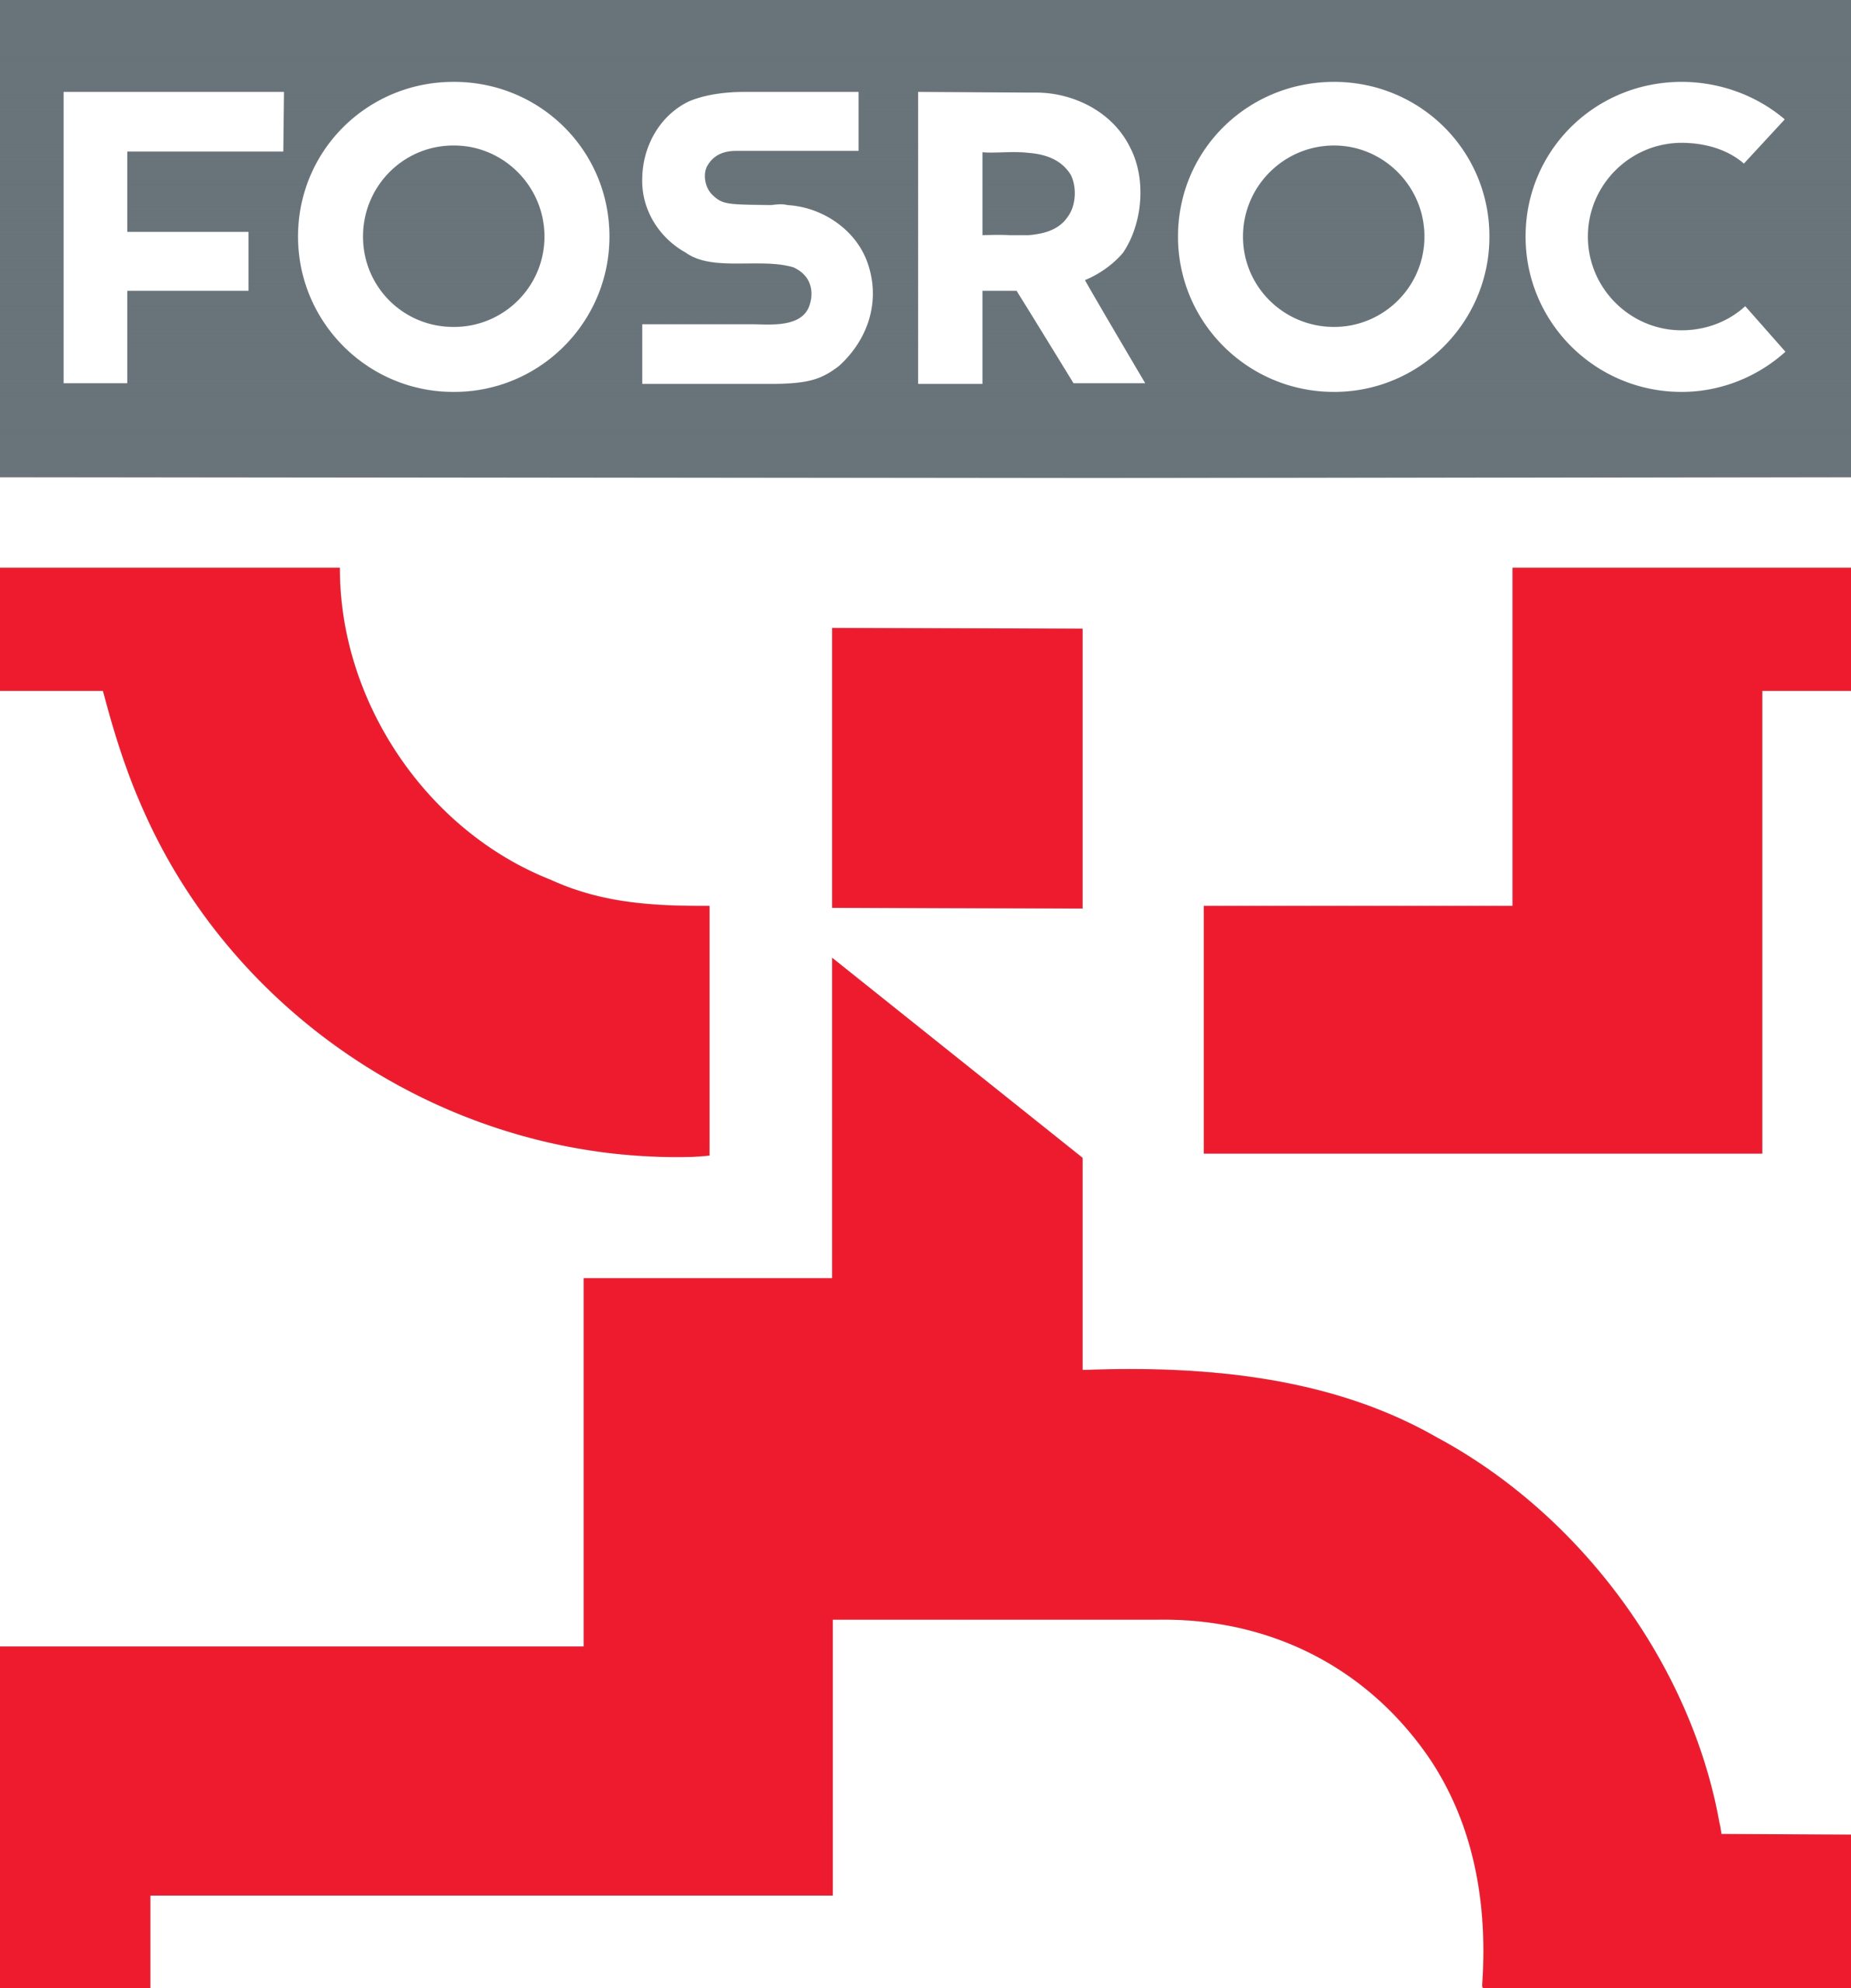 Fosroc Logo HighRes